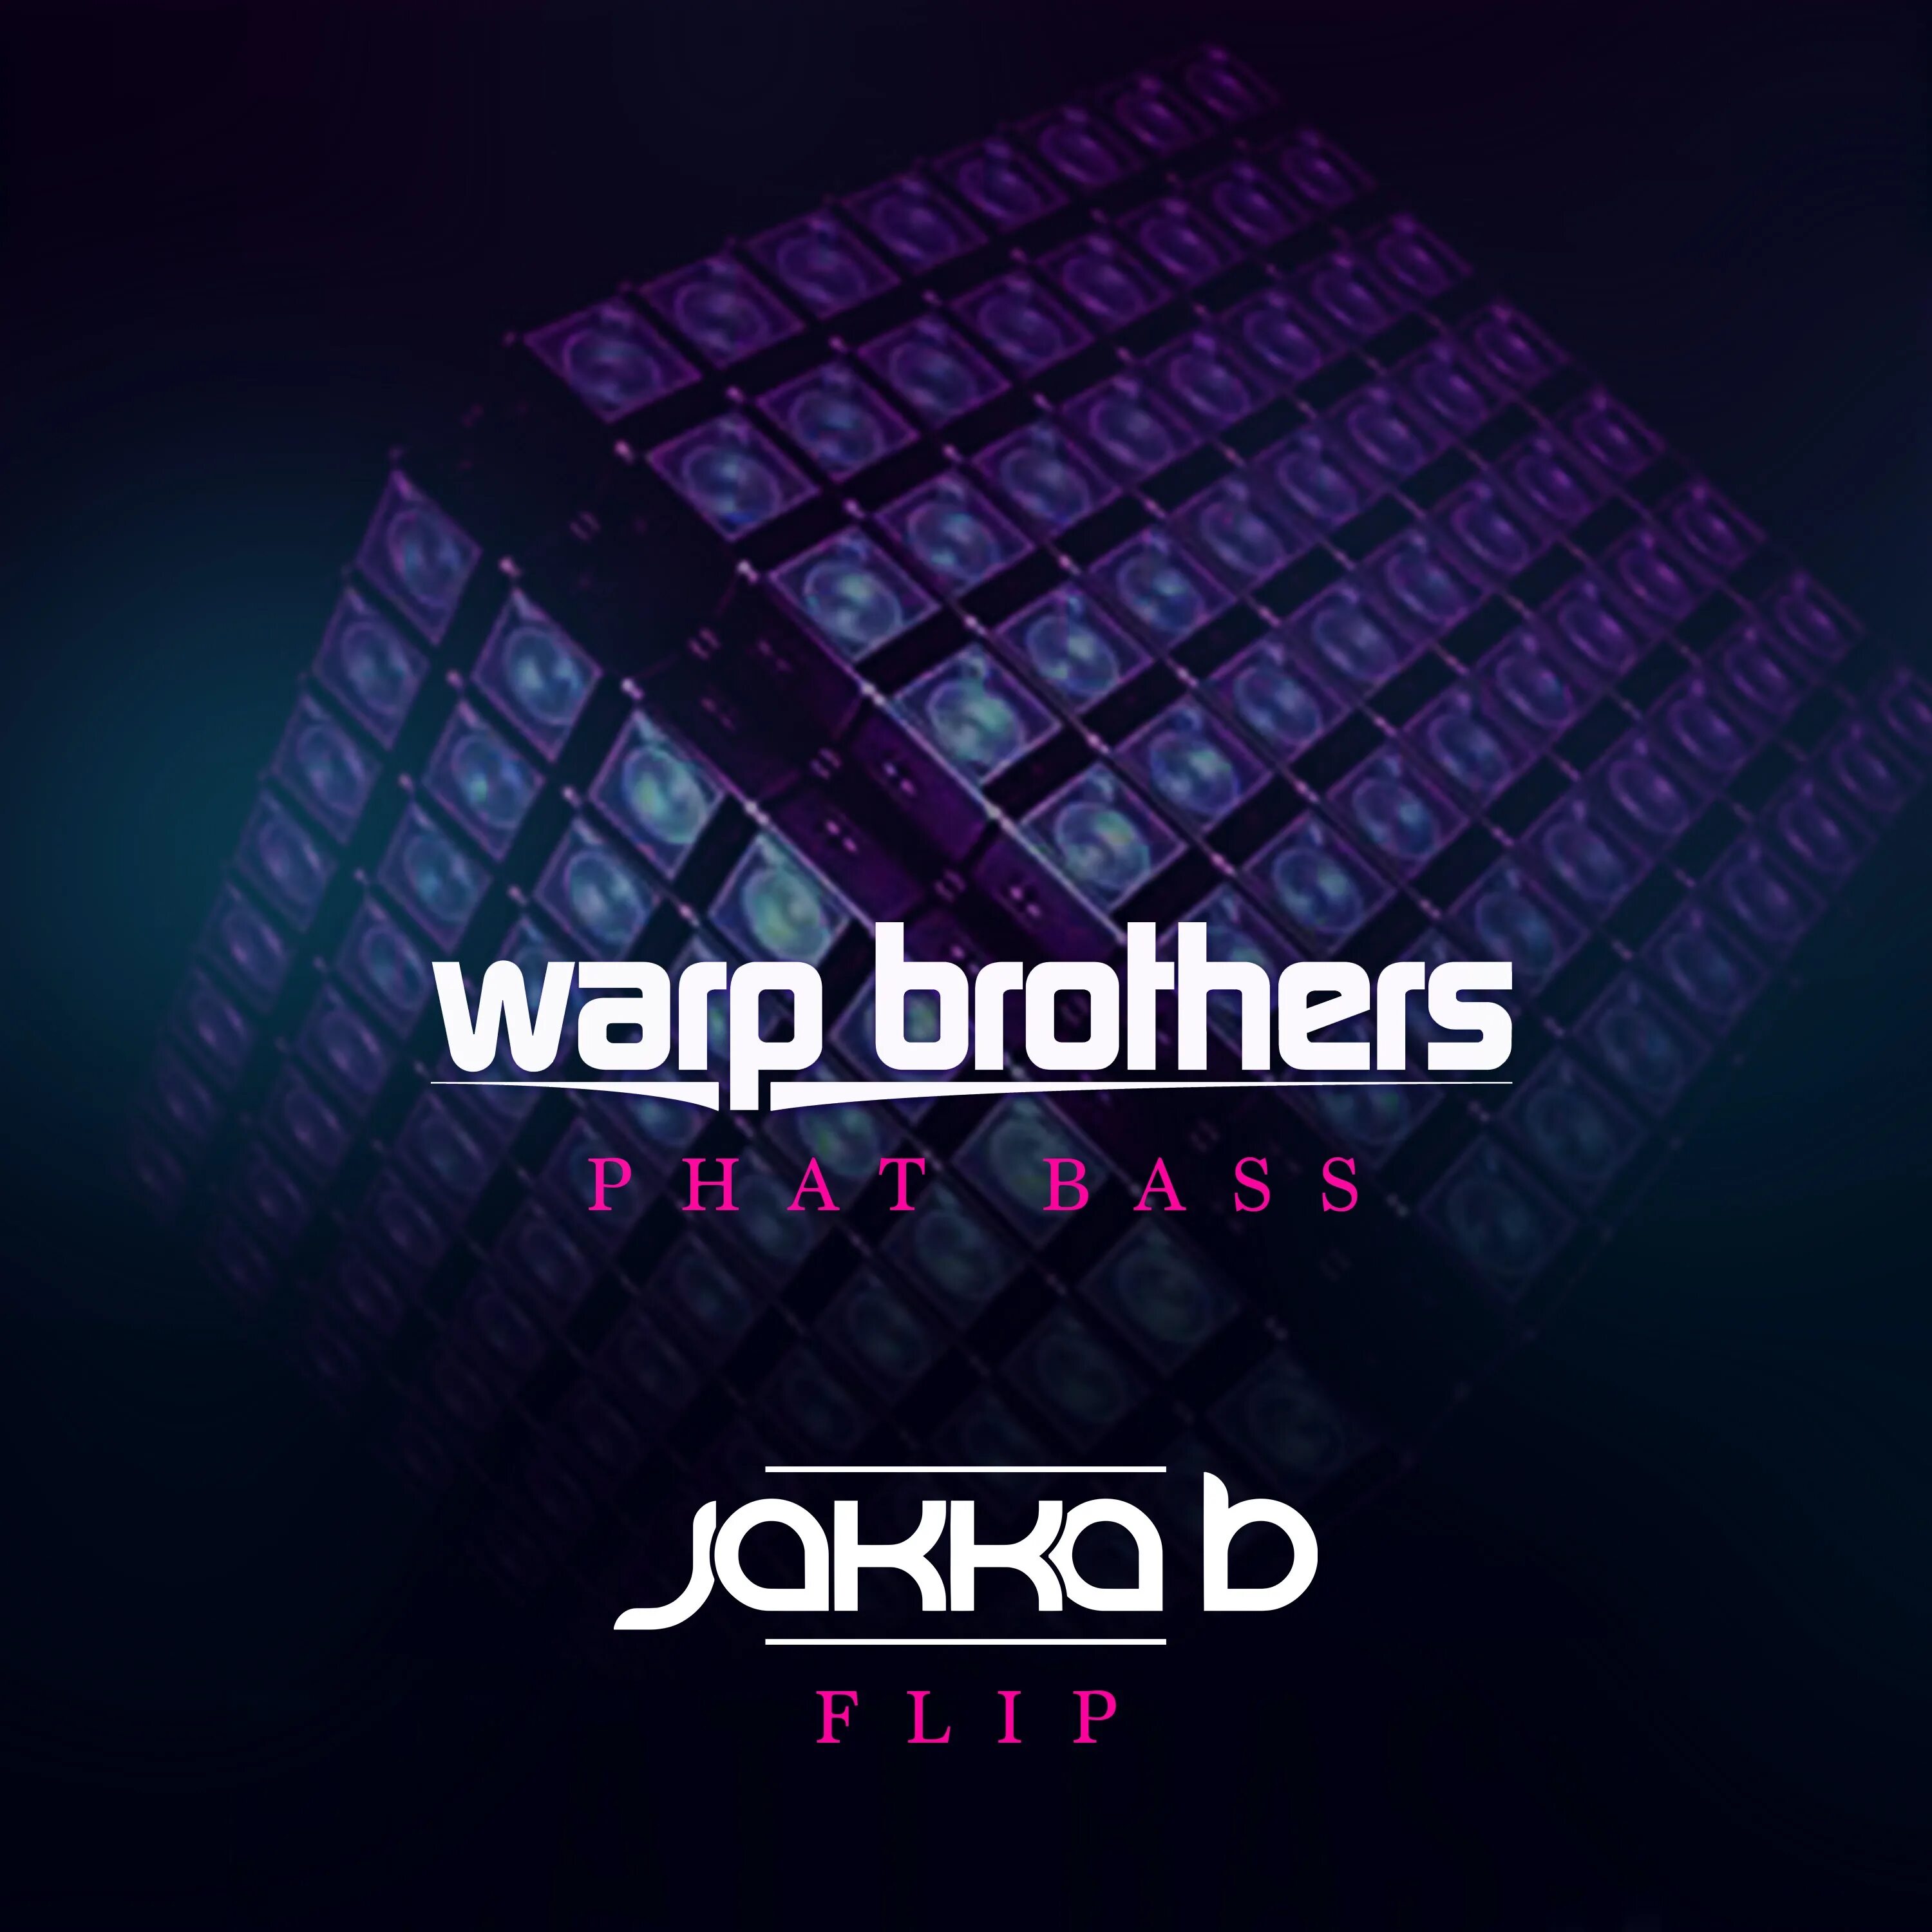 Brother bass. "Warp brothers vs. Aquagen" "phatt Bass & we will Survive (Maxi Single)". Warp brothers - phatt Bass (Warp brothers Bass Mix) релиз. Aquagen vs Warp brothers phatt Bass. Винил диджей Warp brothers.